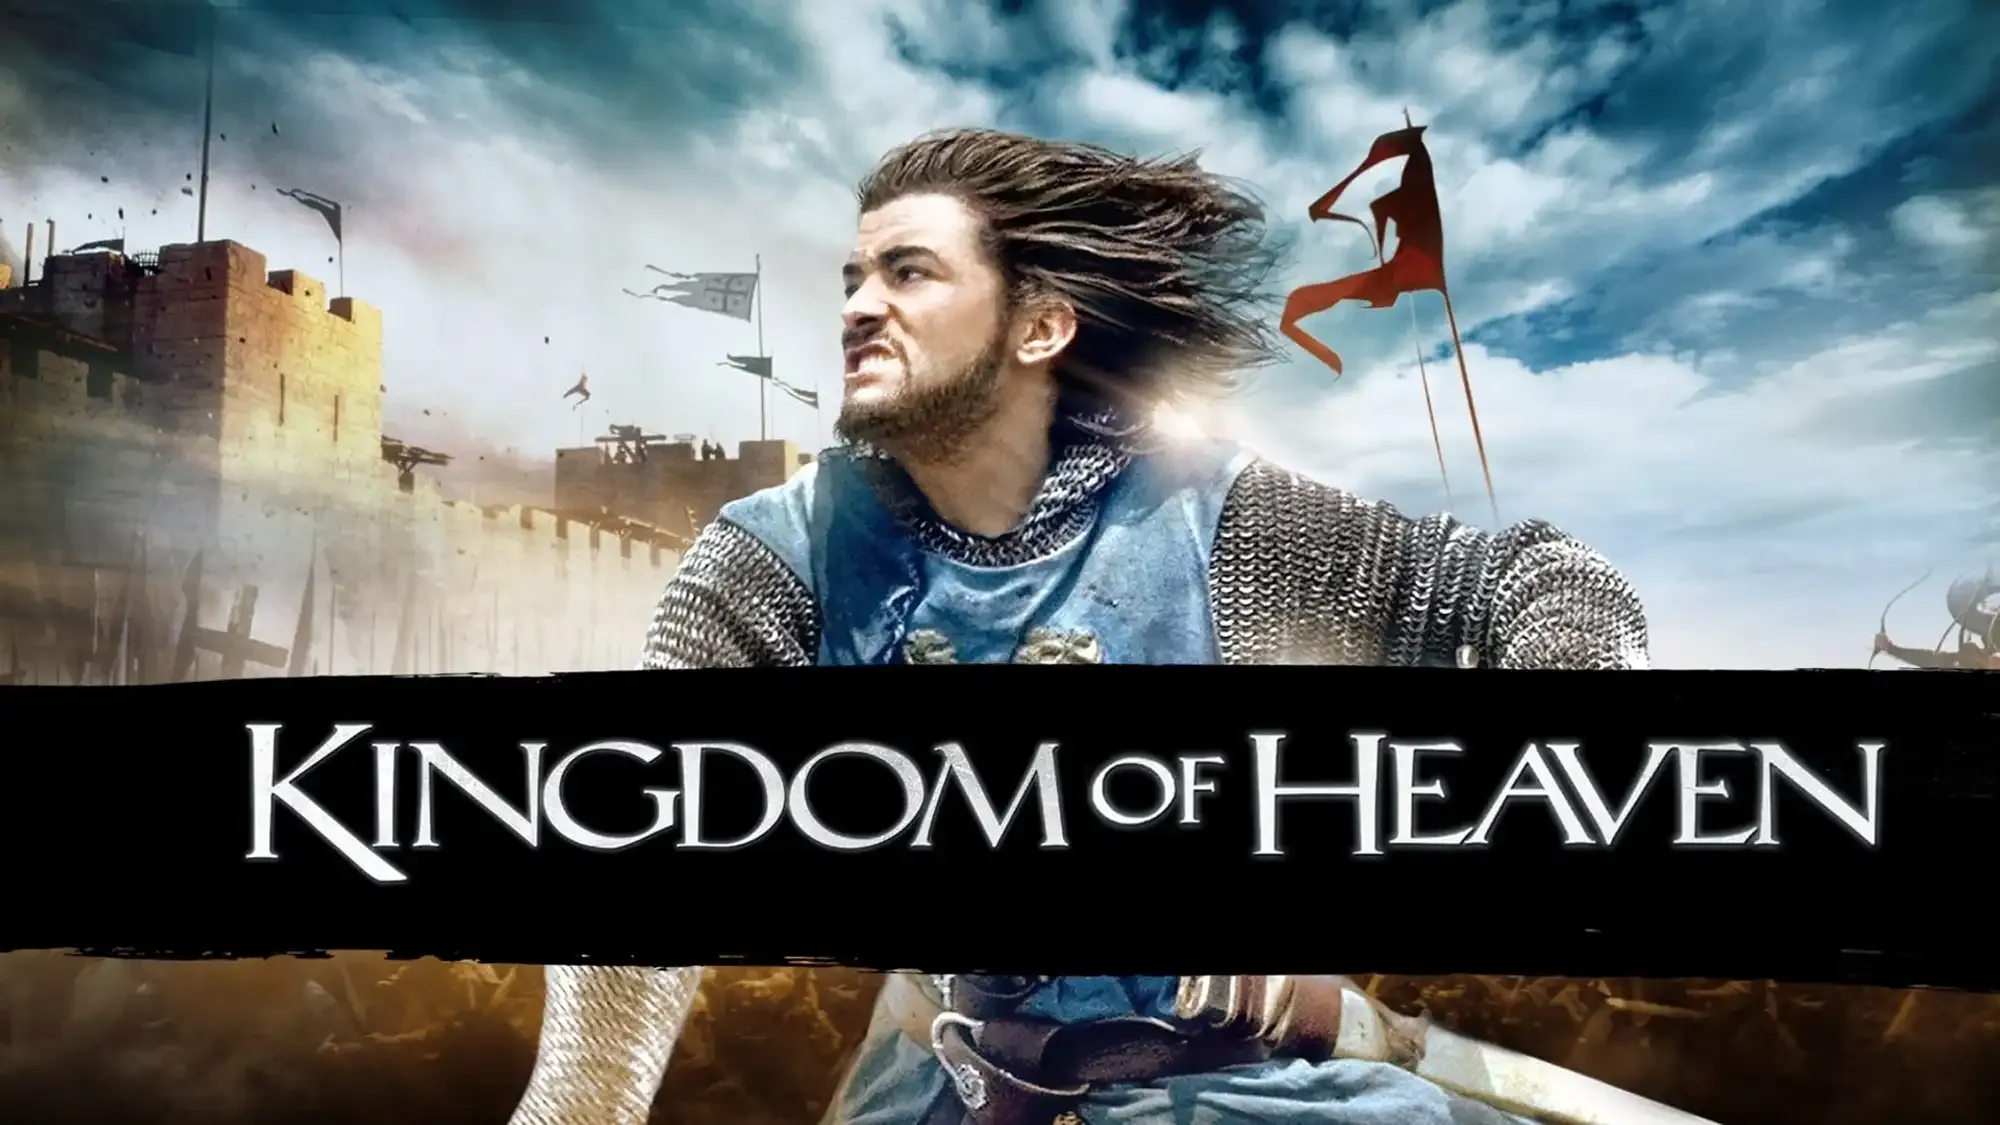 Kingdom of Heaven movie review